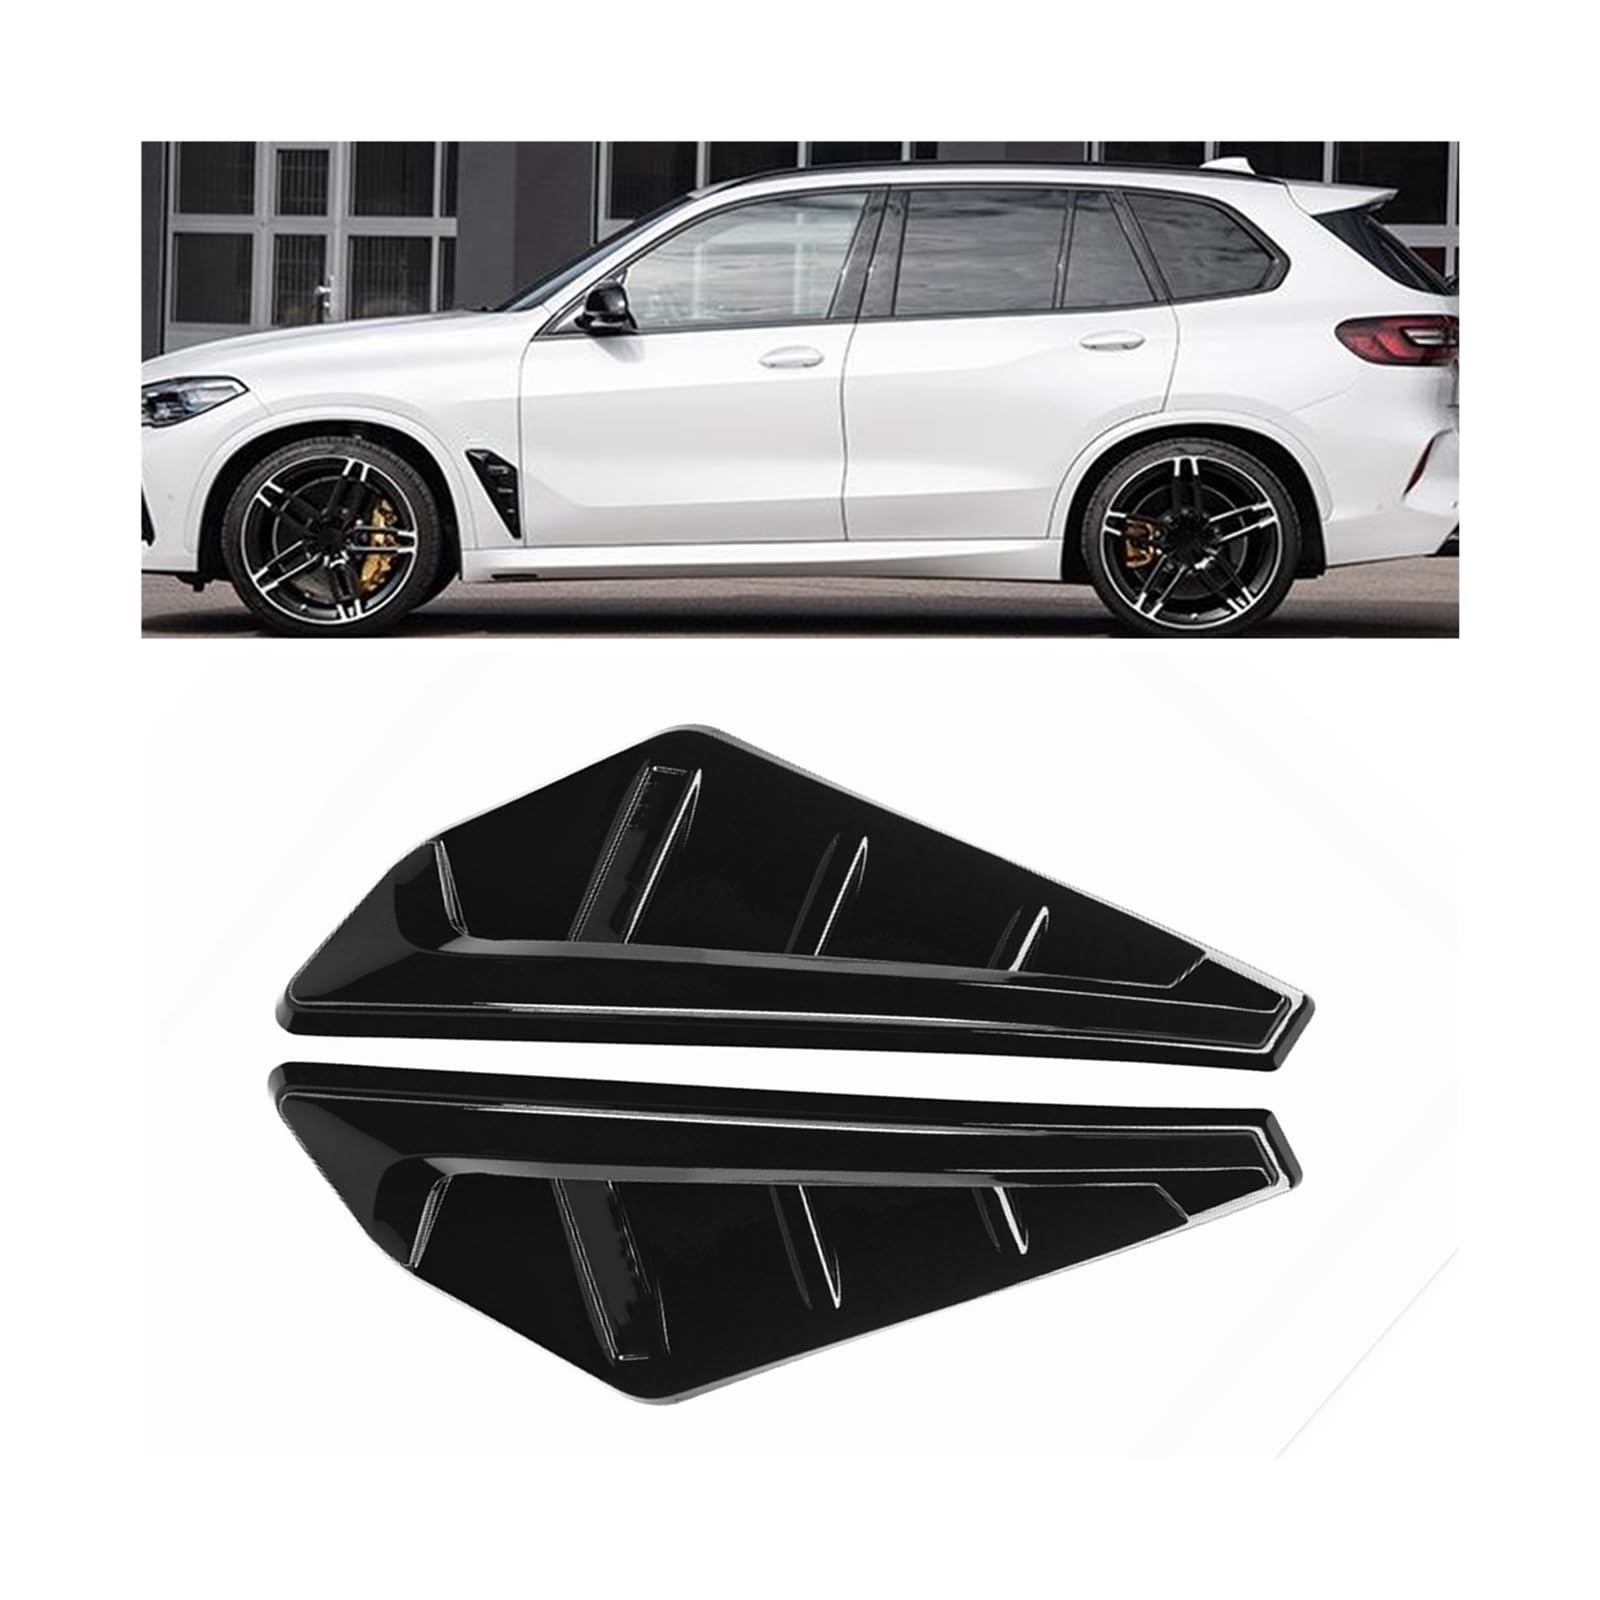 Kompatibel for BMW X5 G05 2019–2022 2021 Kotflügel-Entlüftungsverkleidung an der Vorderseite, schwarz glänzend, Karosserieauslass, Splitter, Spoiler, Ansaug-Canards von NGFDSSBB